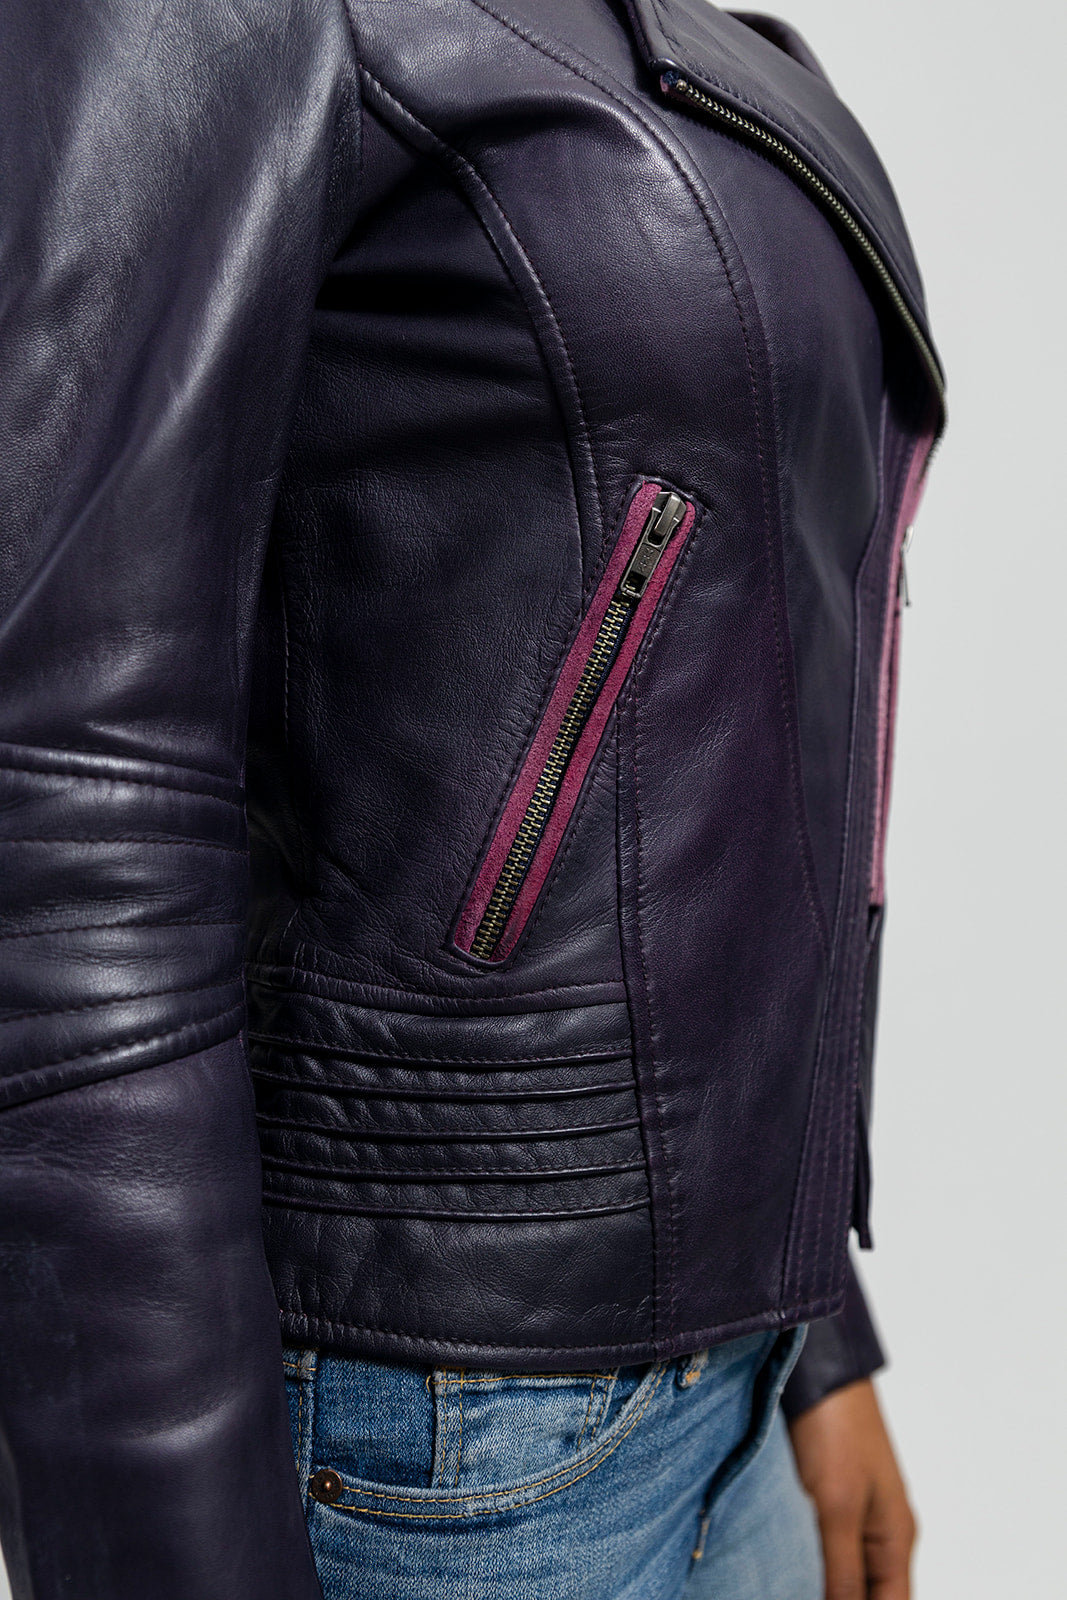 Trish Womens Leather Jacket (Violet) Women's Leather Jacket Whet Blu NYC   